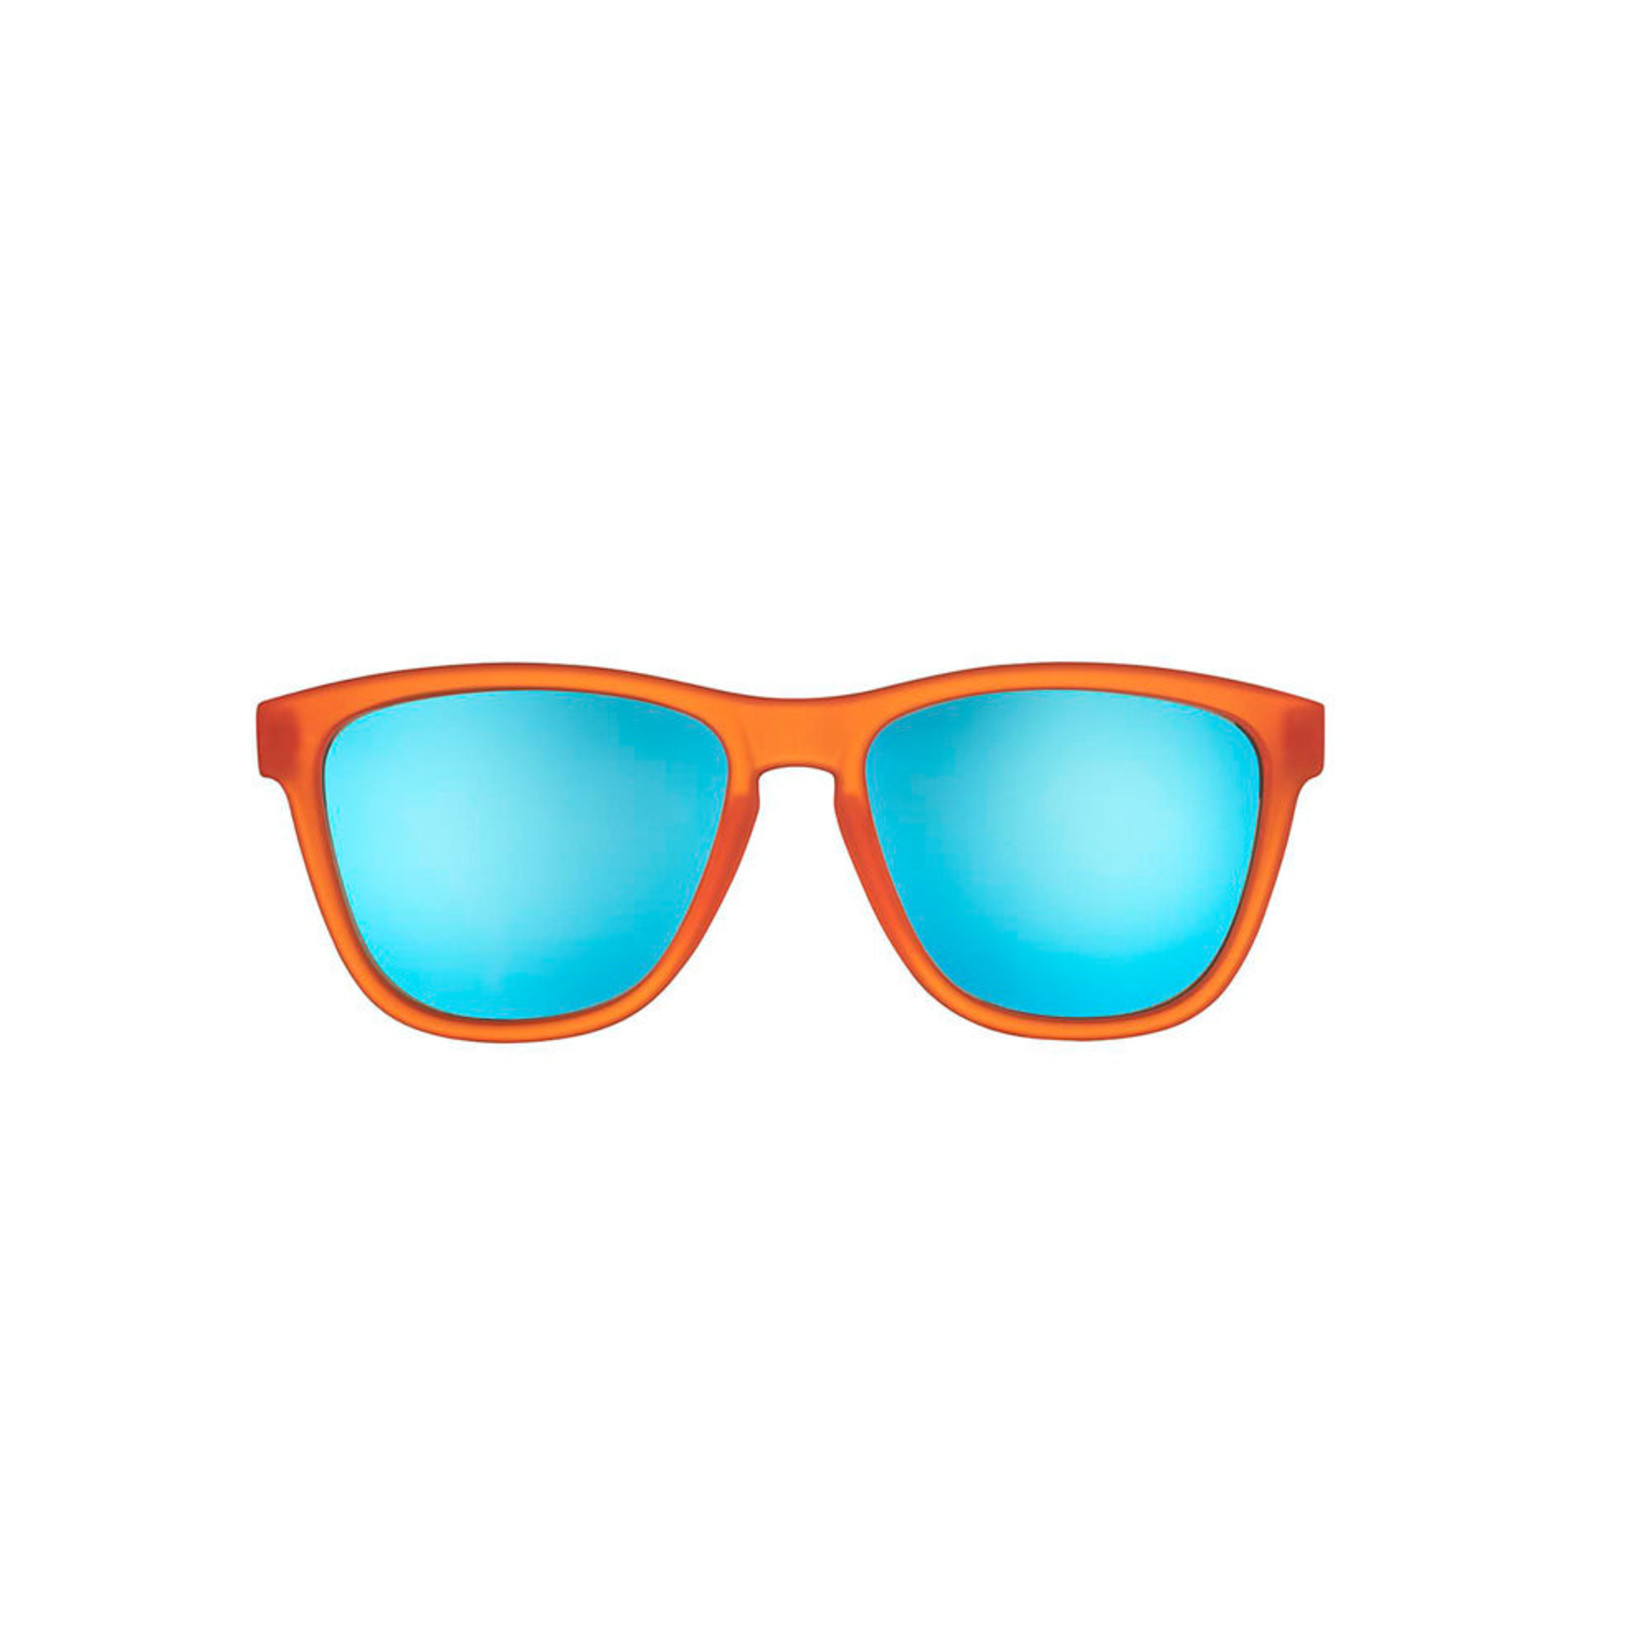 Goodr - OG Sunglasses Donkey Goggles